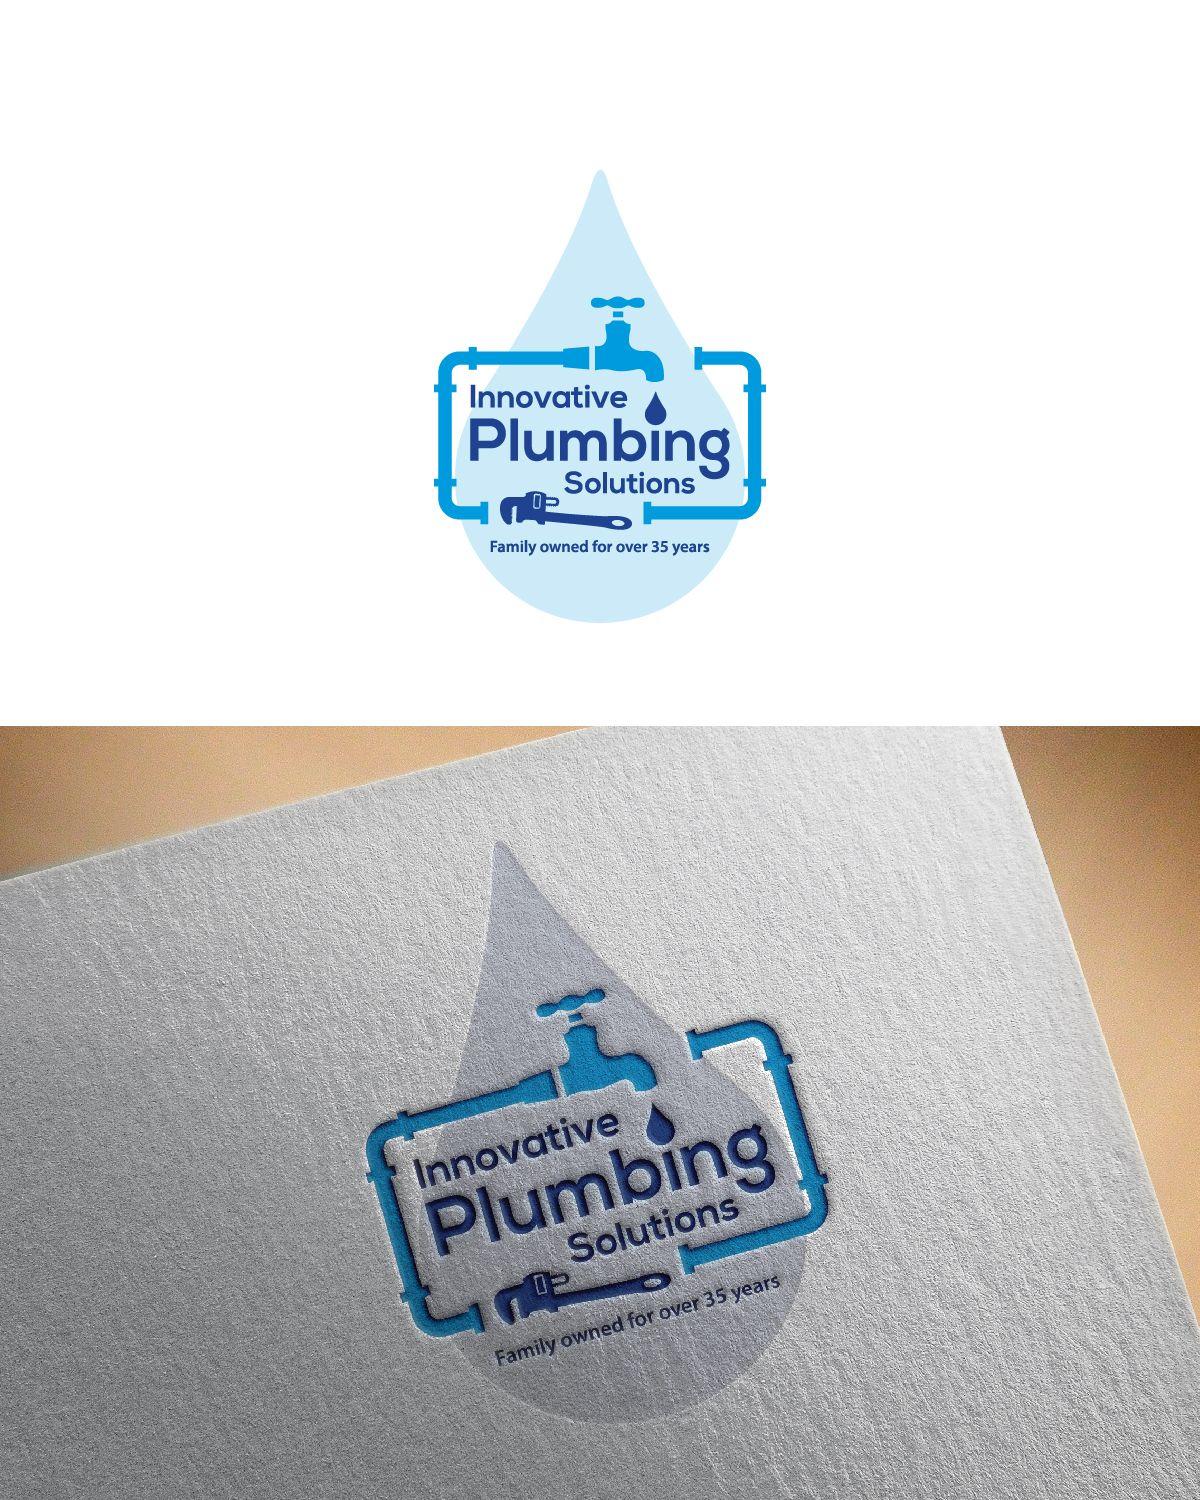 Plumbing Company Logo - Bold, Masculine, It Company Logo Design for Innovative Plumbing ...